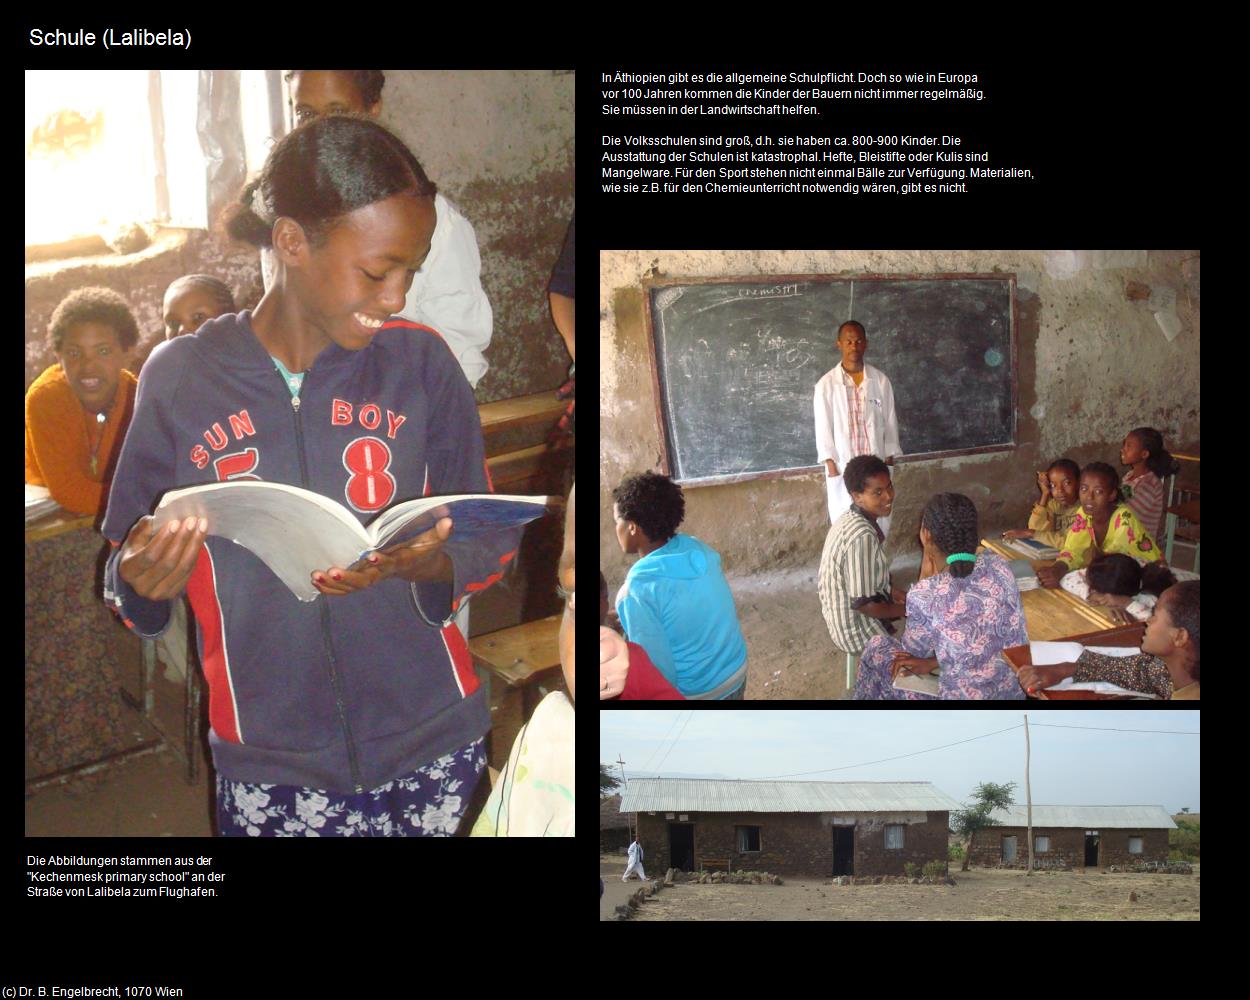 Schule (Lalibela) in Äthiopien